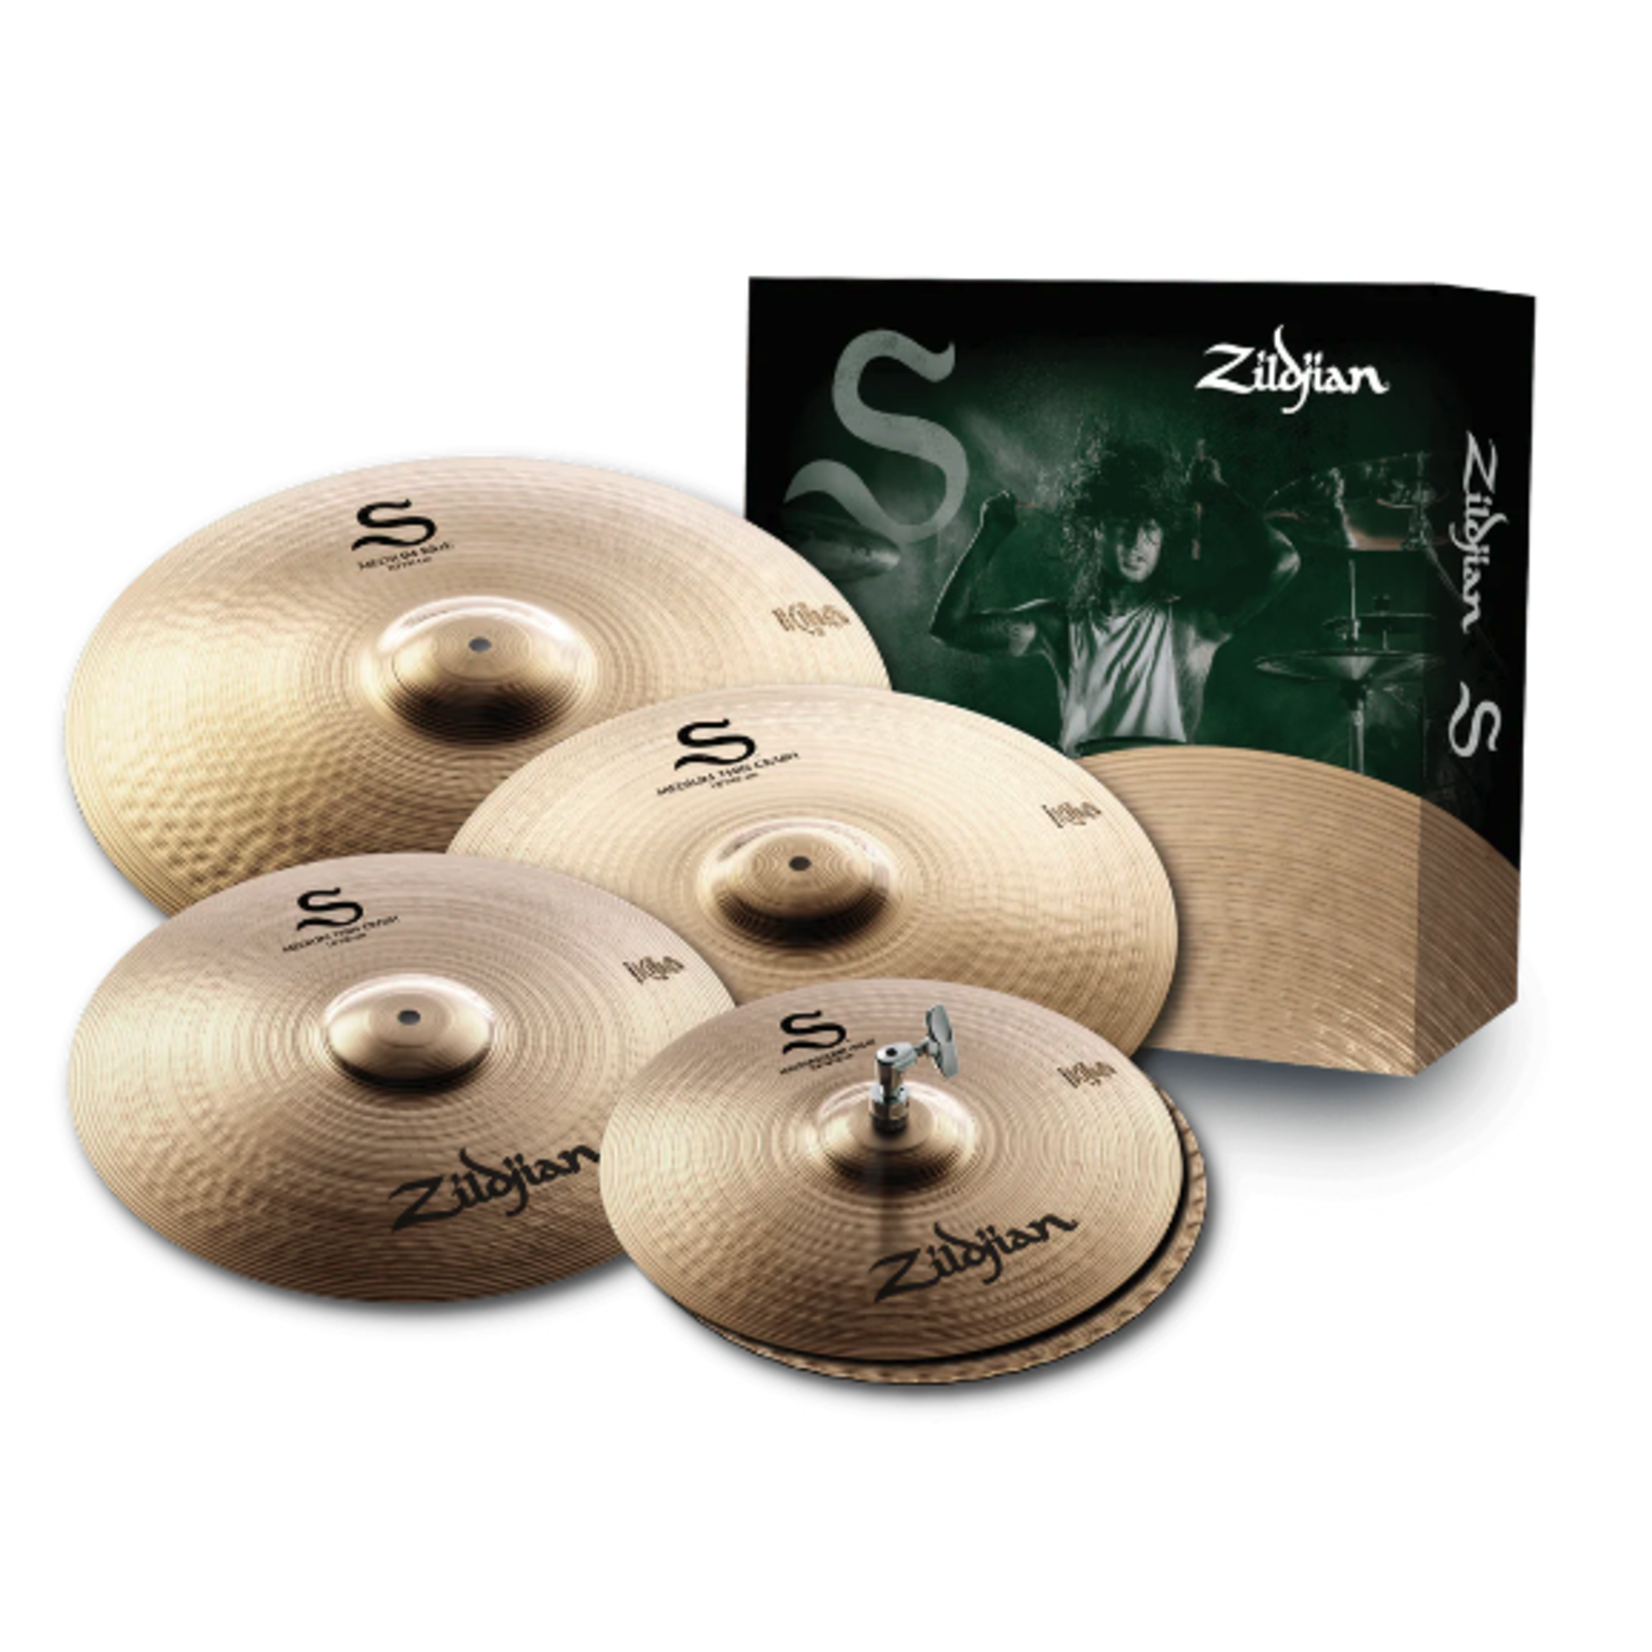 Zildjian S Series Performer Cymbal Pack